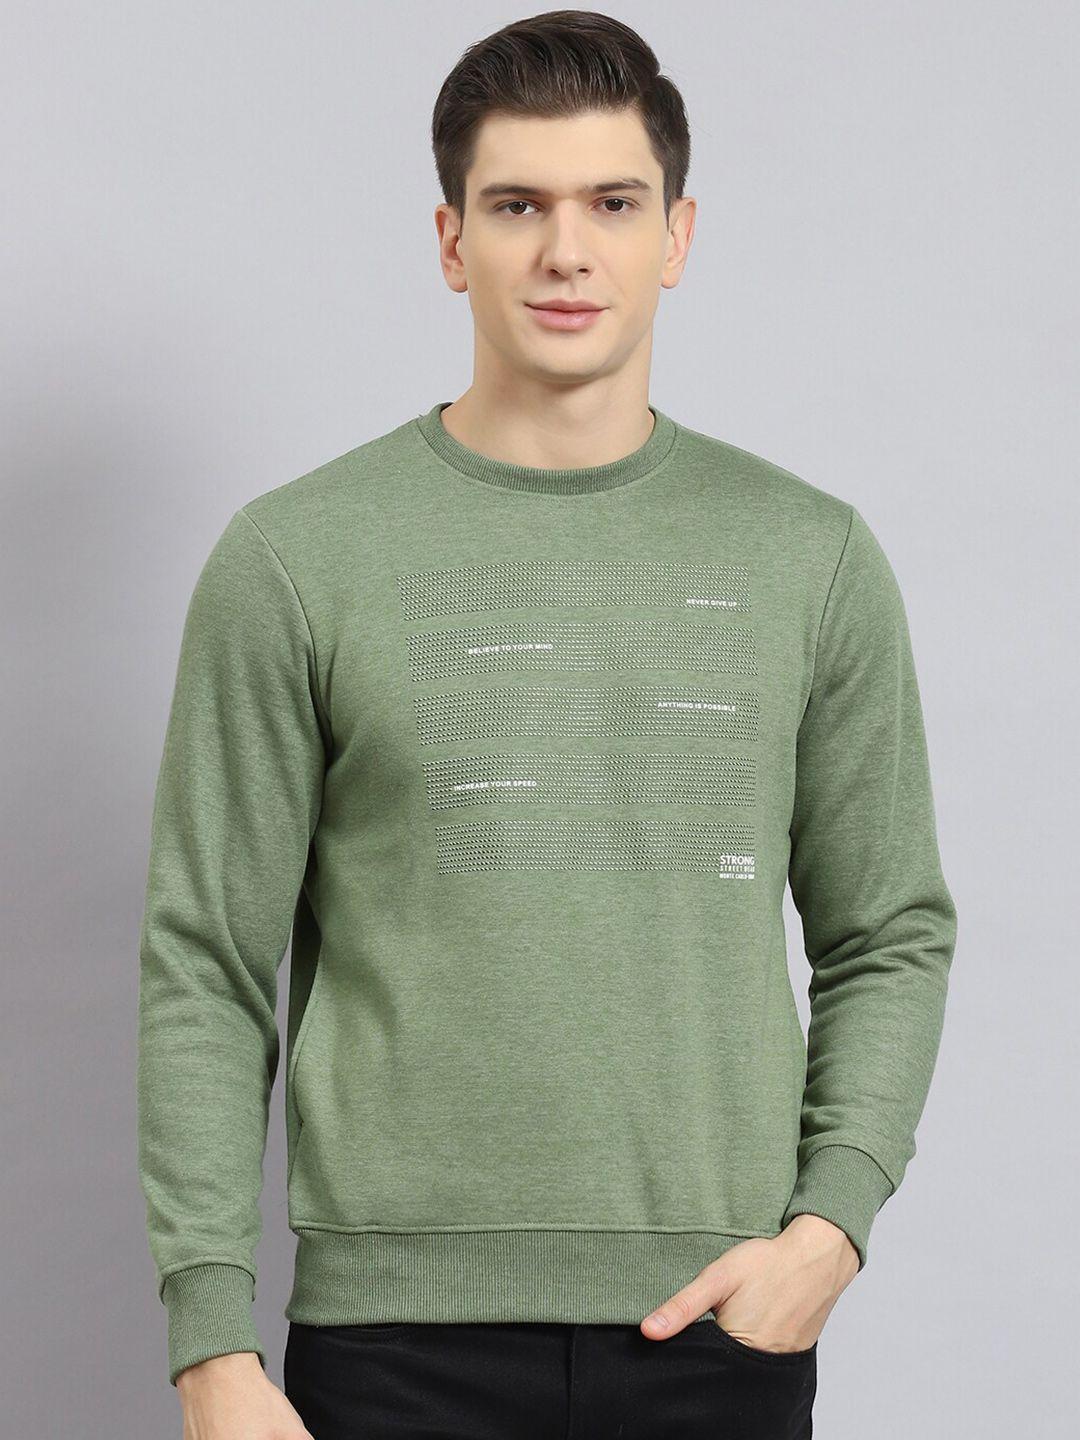 monte carlo typography printed round neck cotton pullover sweatshirt